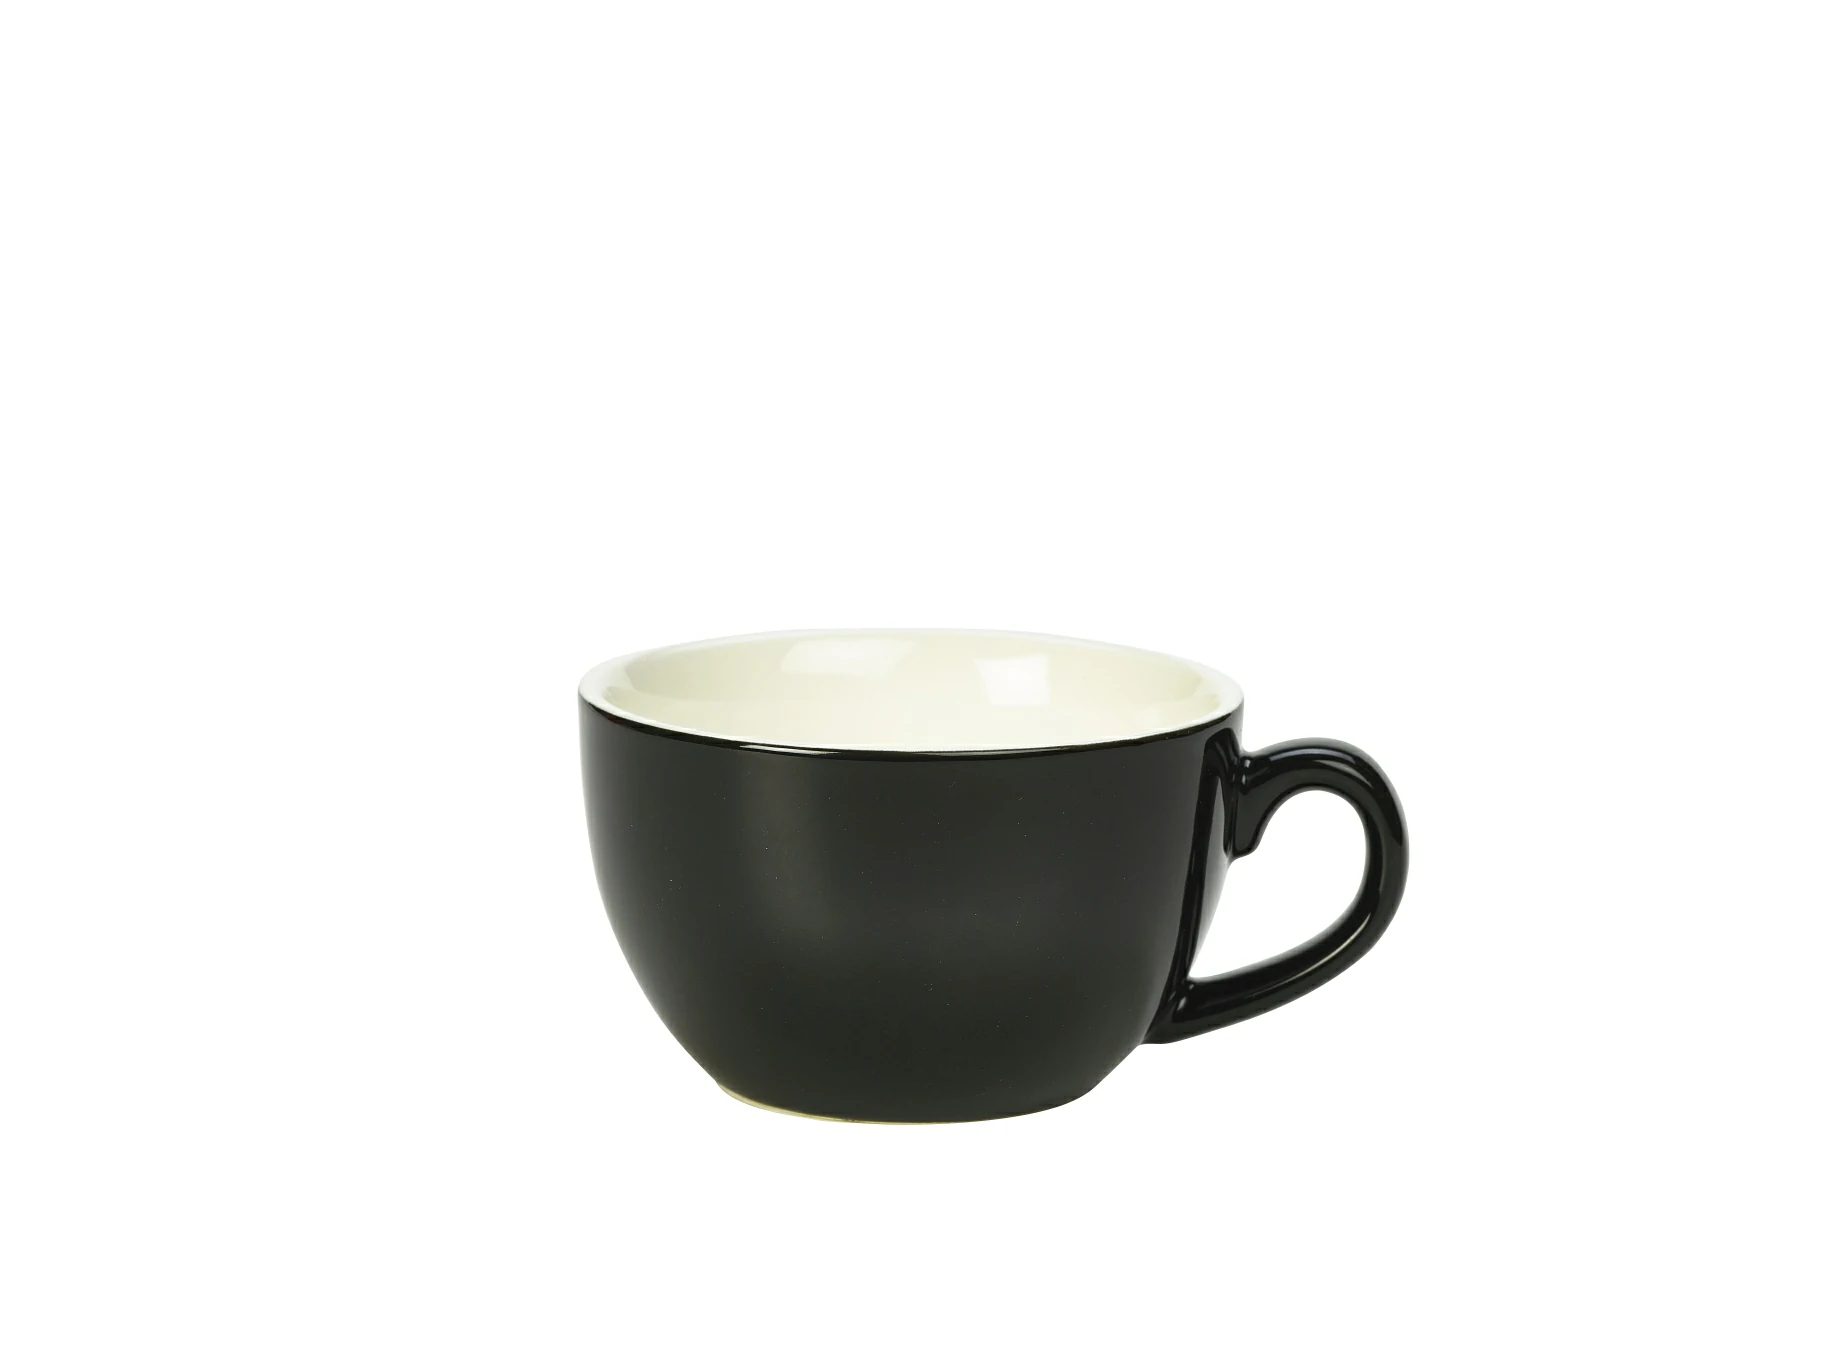 Genware Porcelain Black Bowl Shaped Cup 25cl/8.75oz